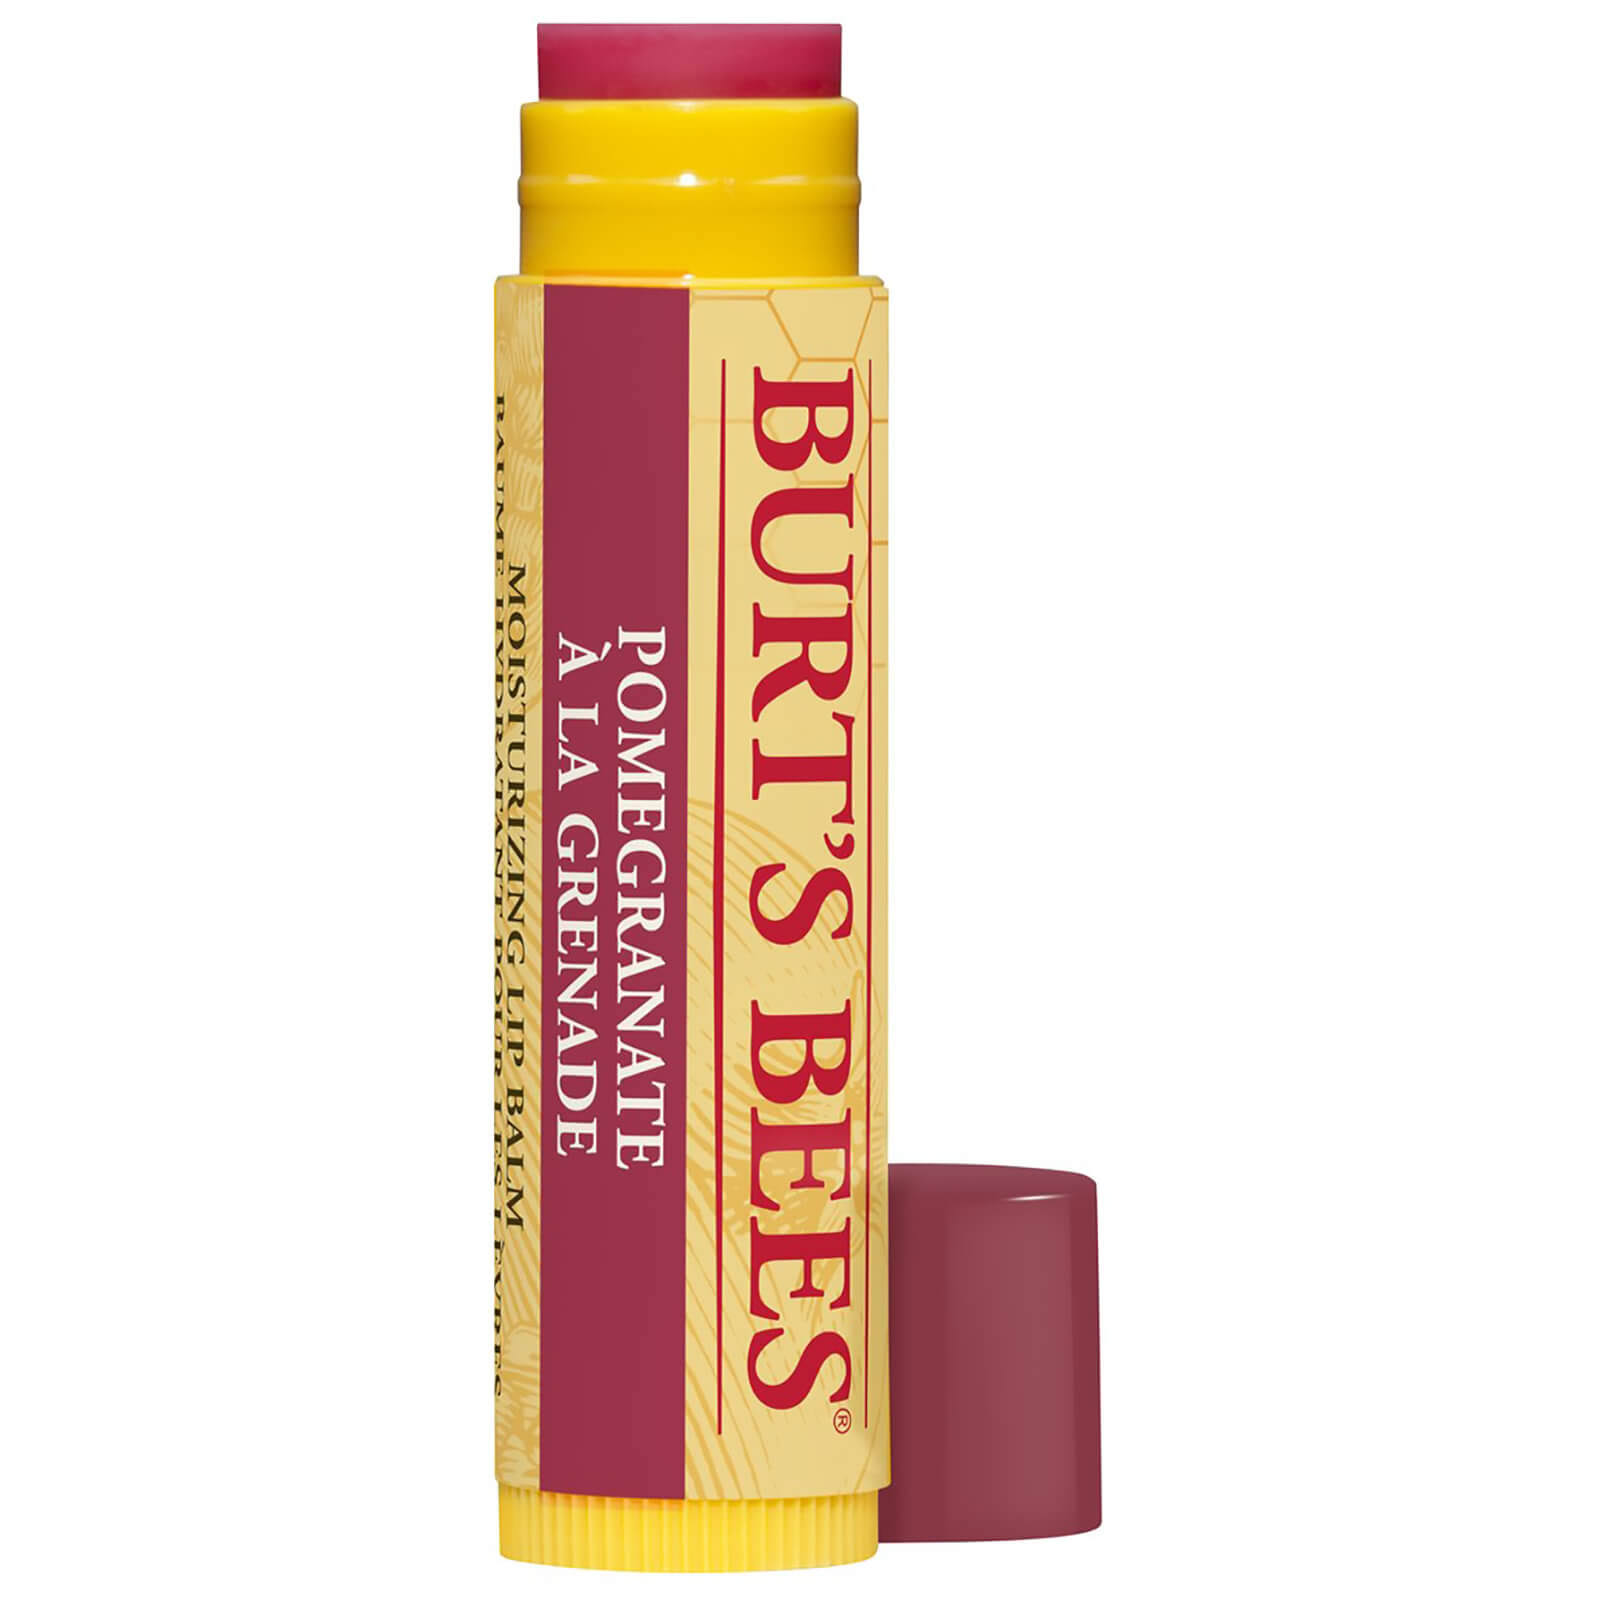 Burt's Bees Replenishing Lip Balm - with Pomegranate Oil, 4.25g